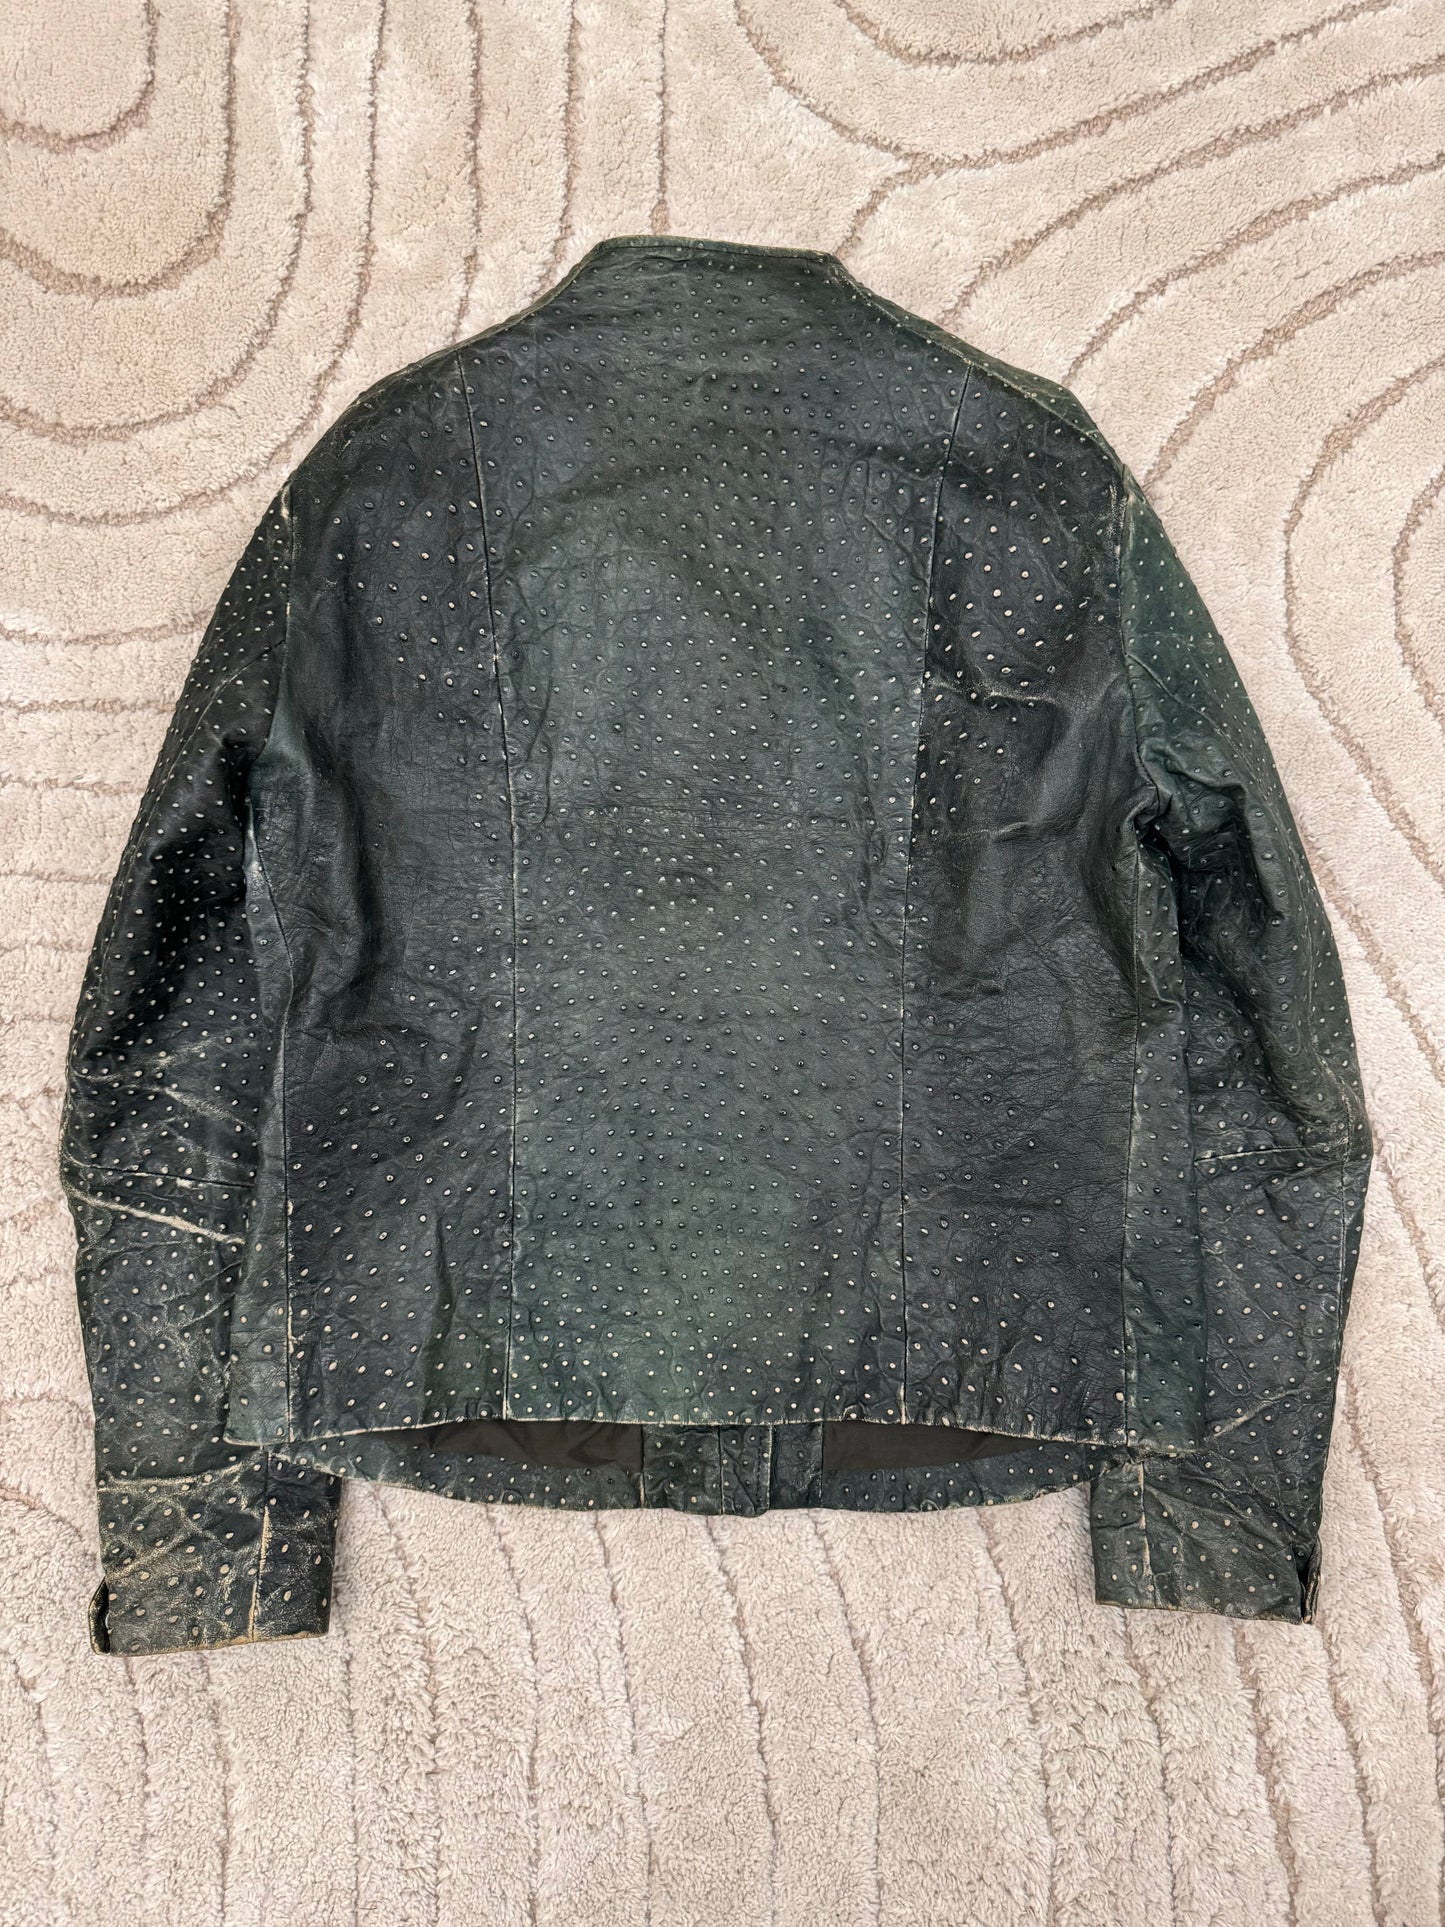 FW2009 Emporio Armani Ostrich Leather Jacket (L)